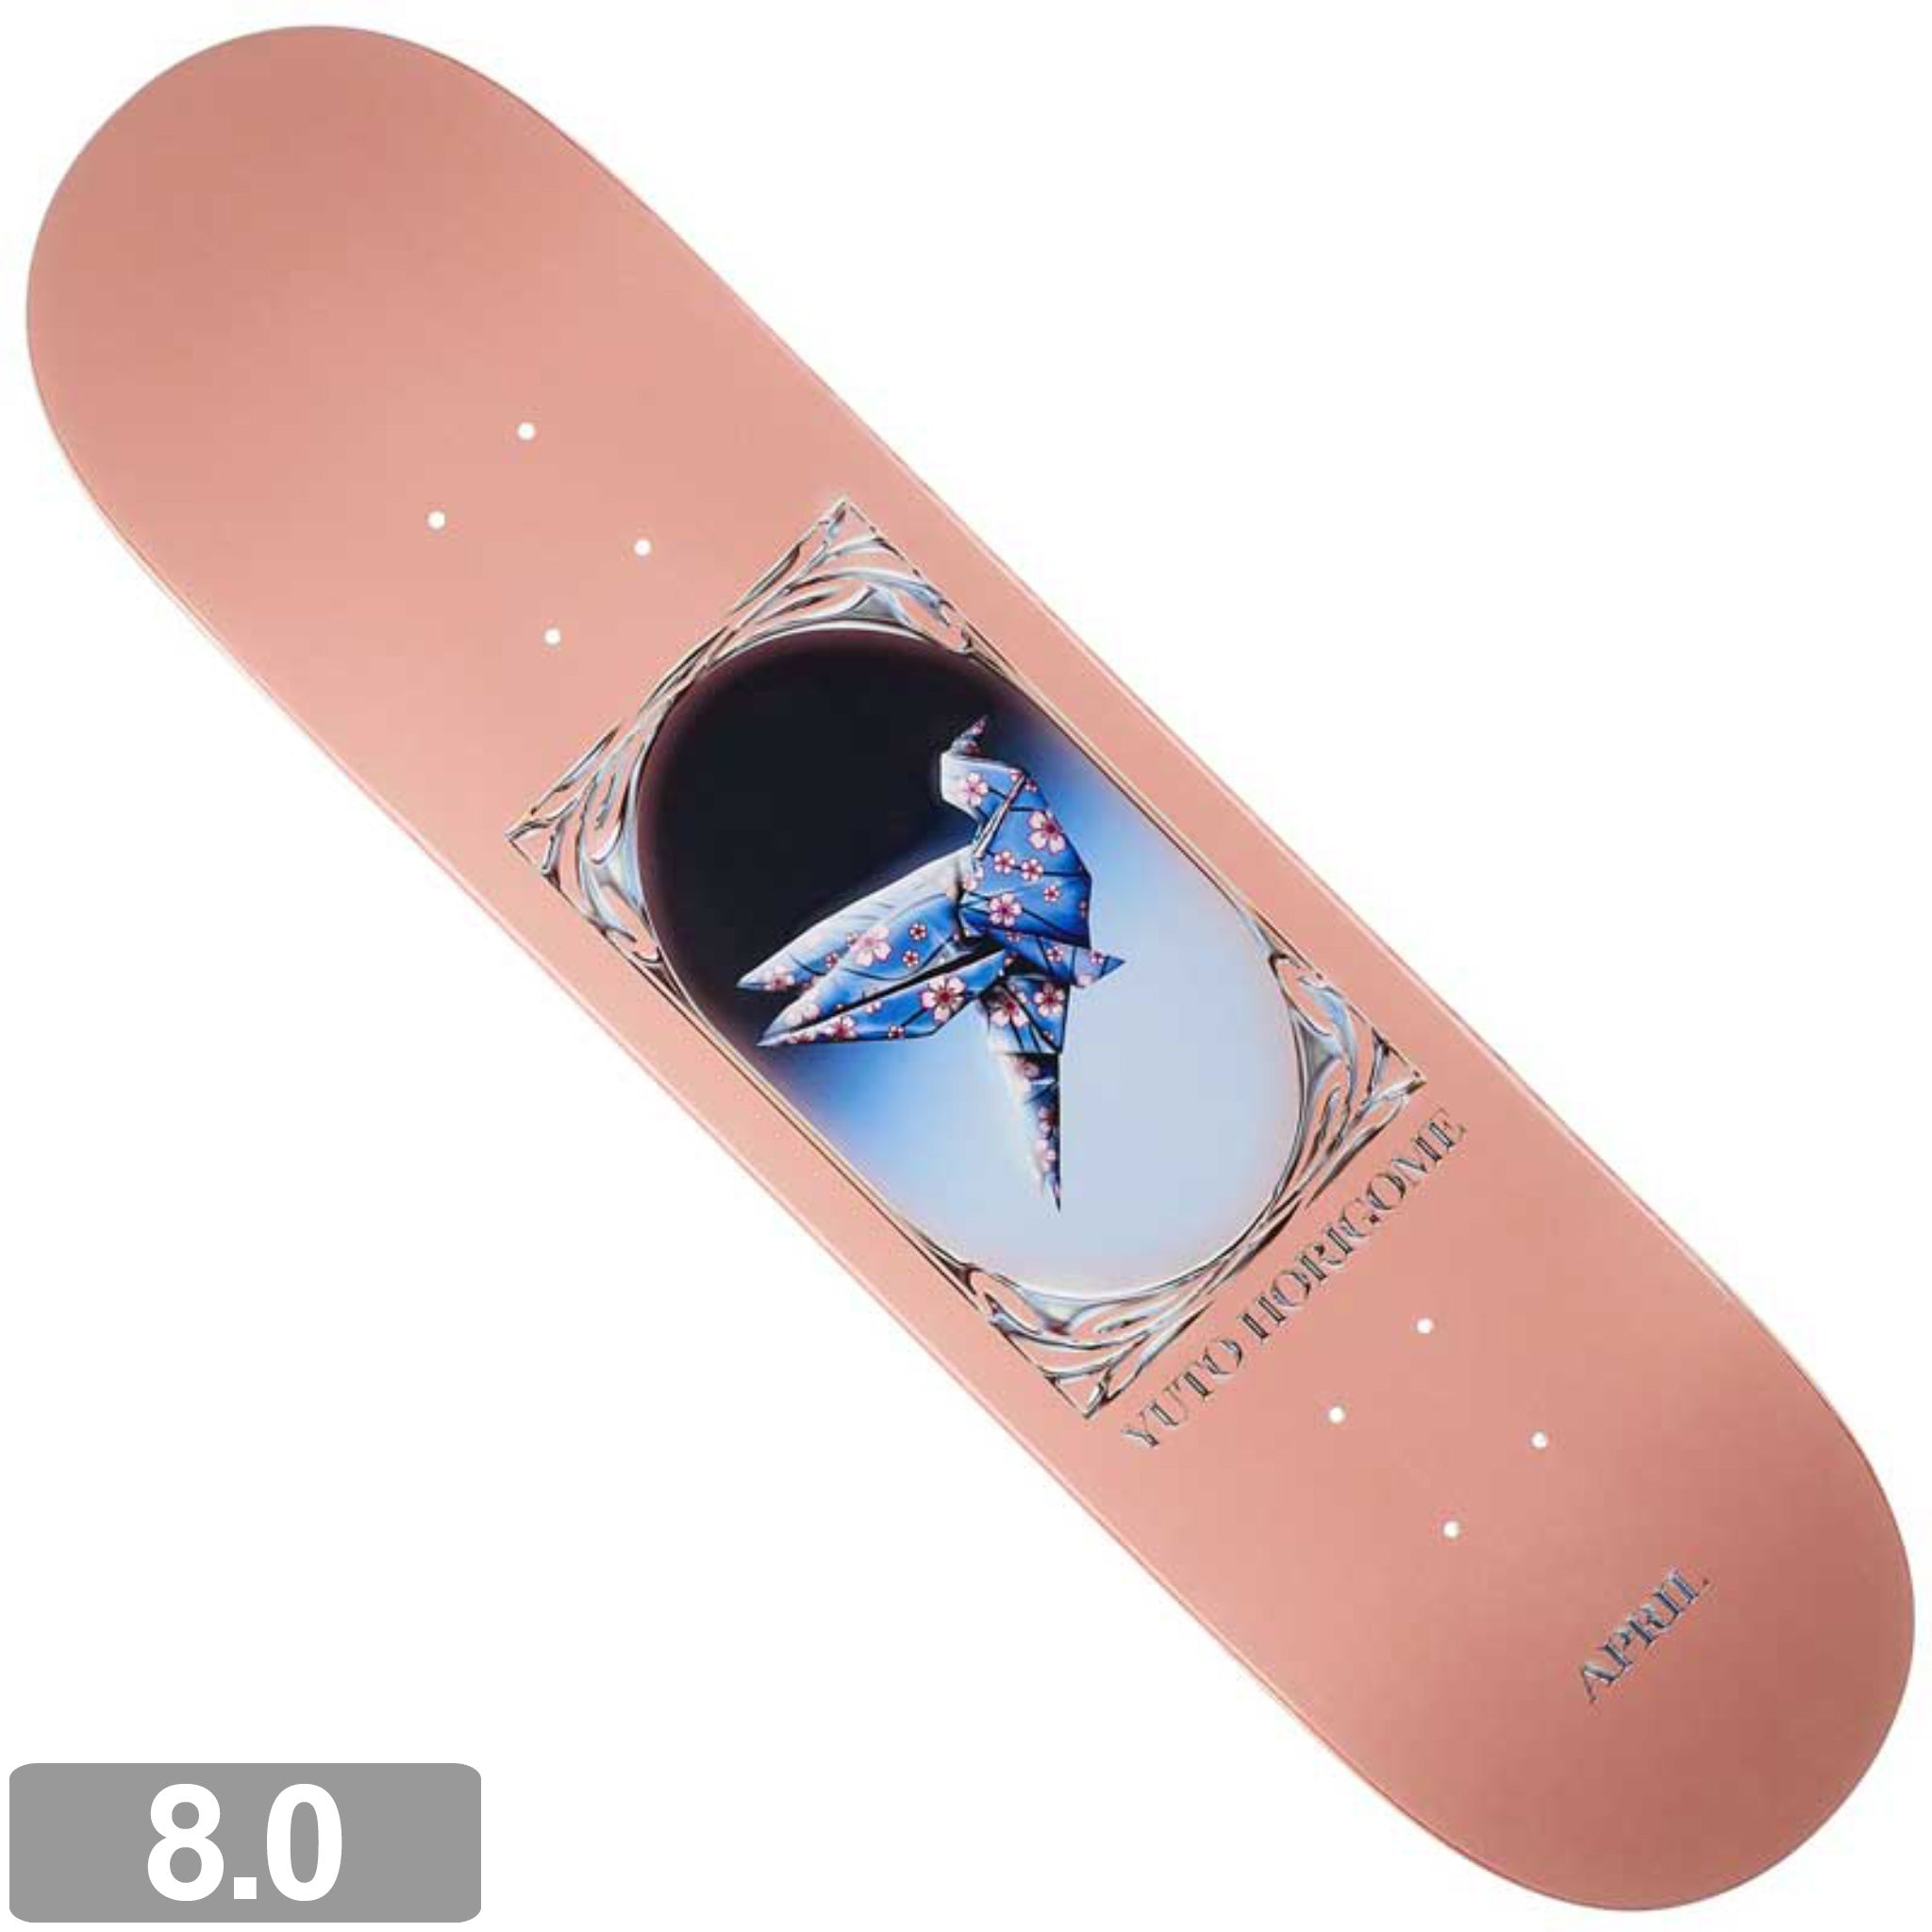 April skateboards 堀米雄斗 YUTO HORIGOME 8.0 - スケートボード